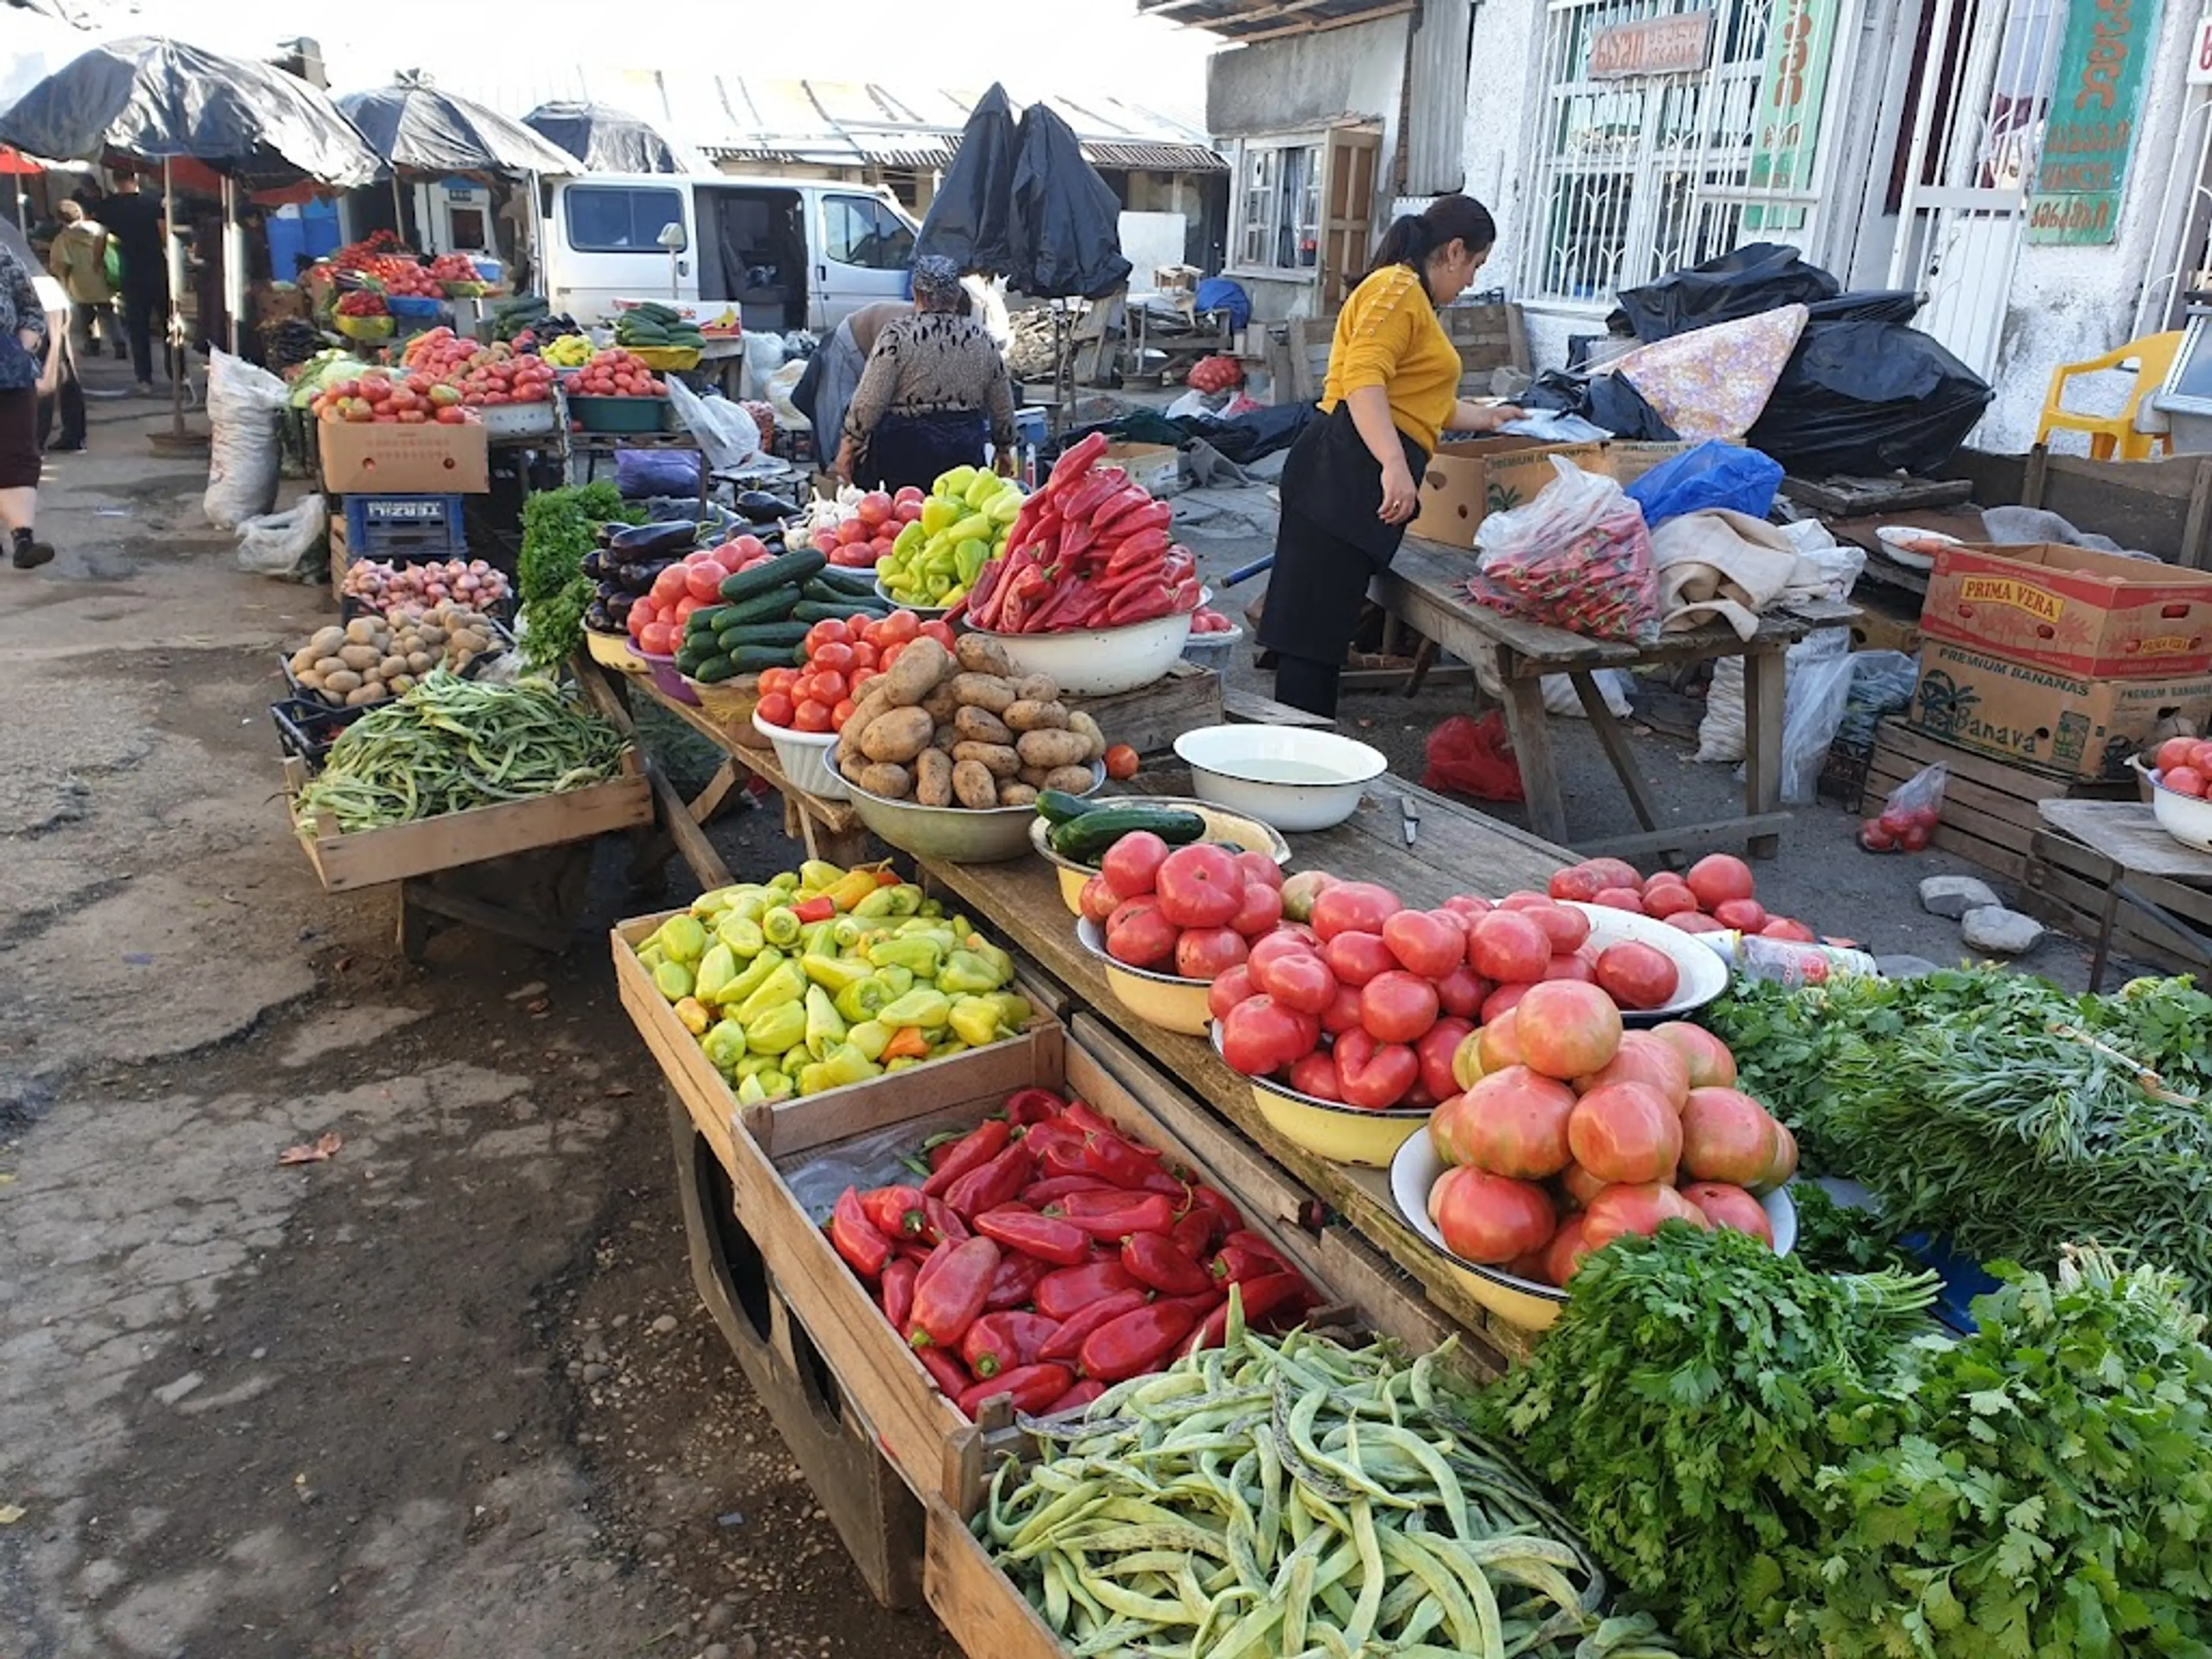 Farmers Market in Telavi